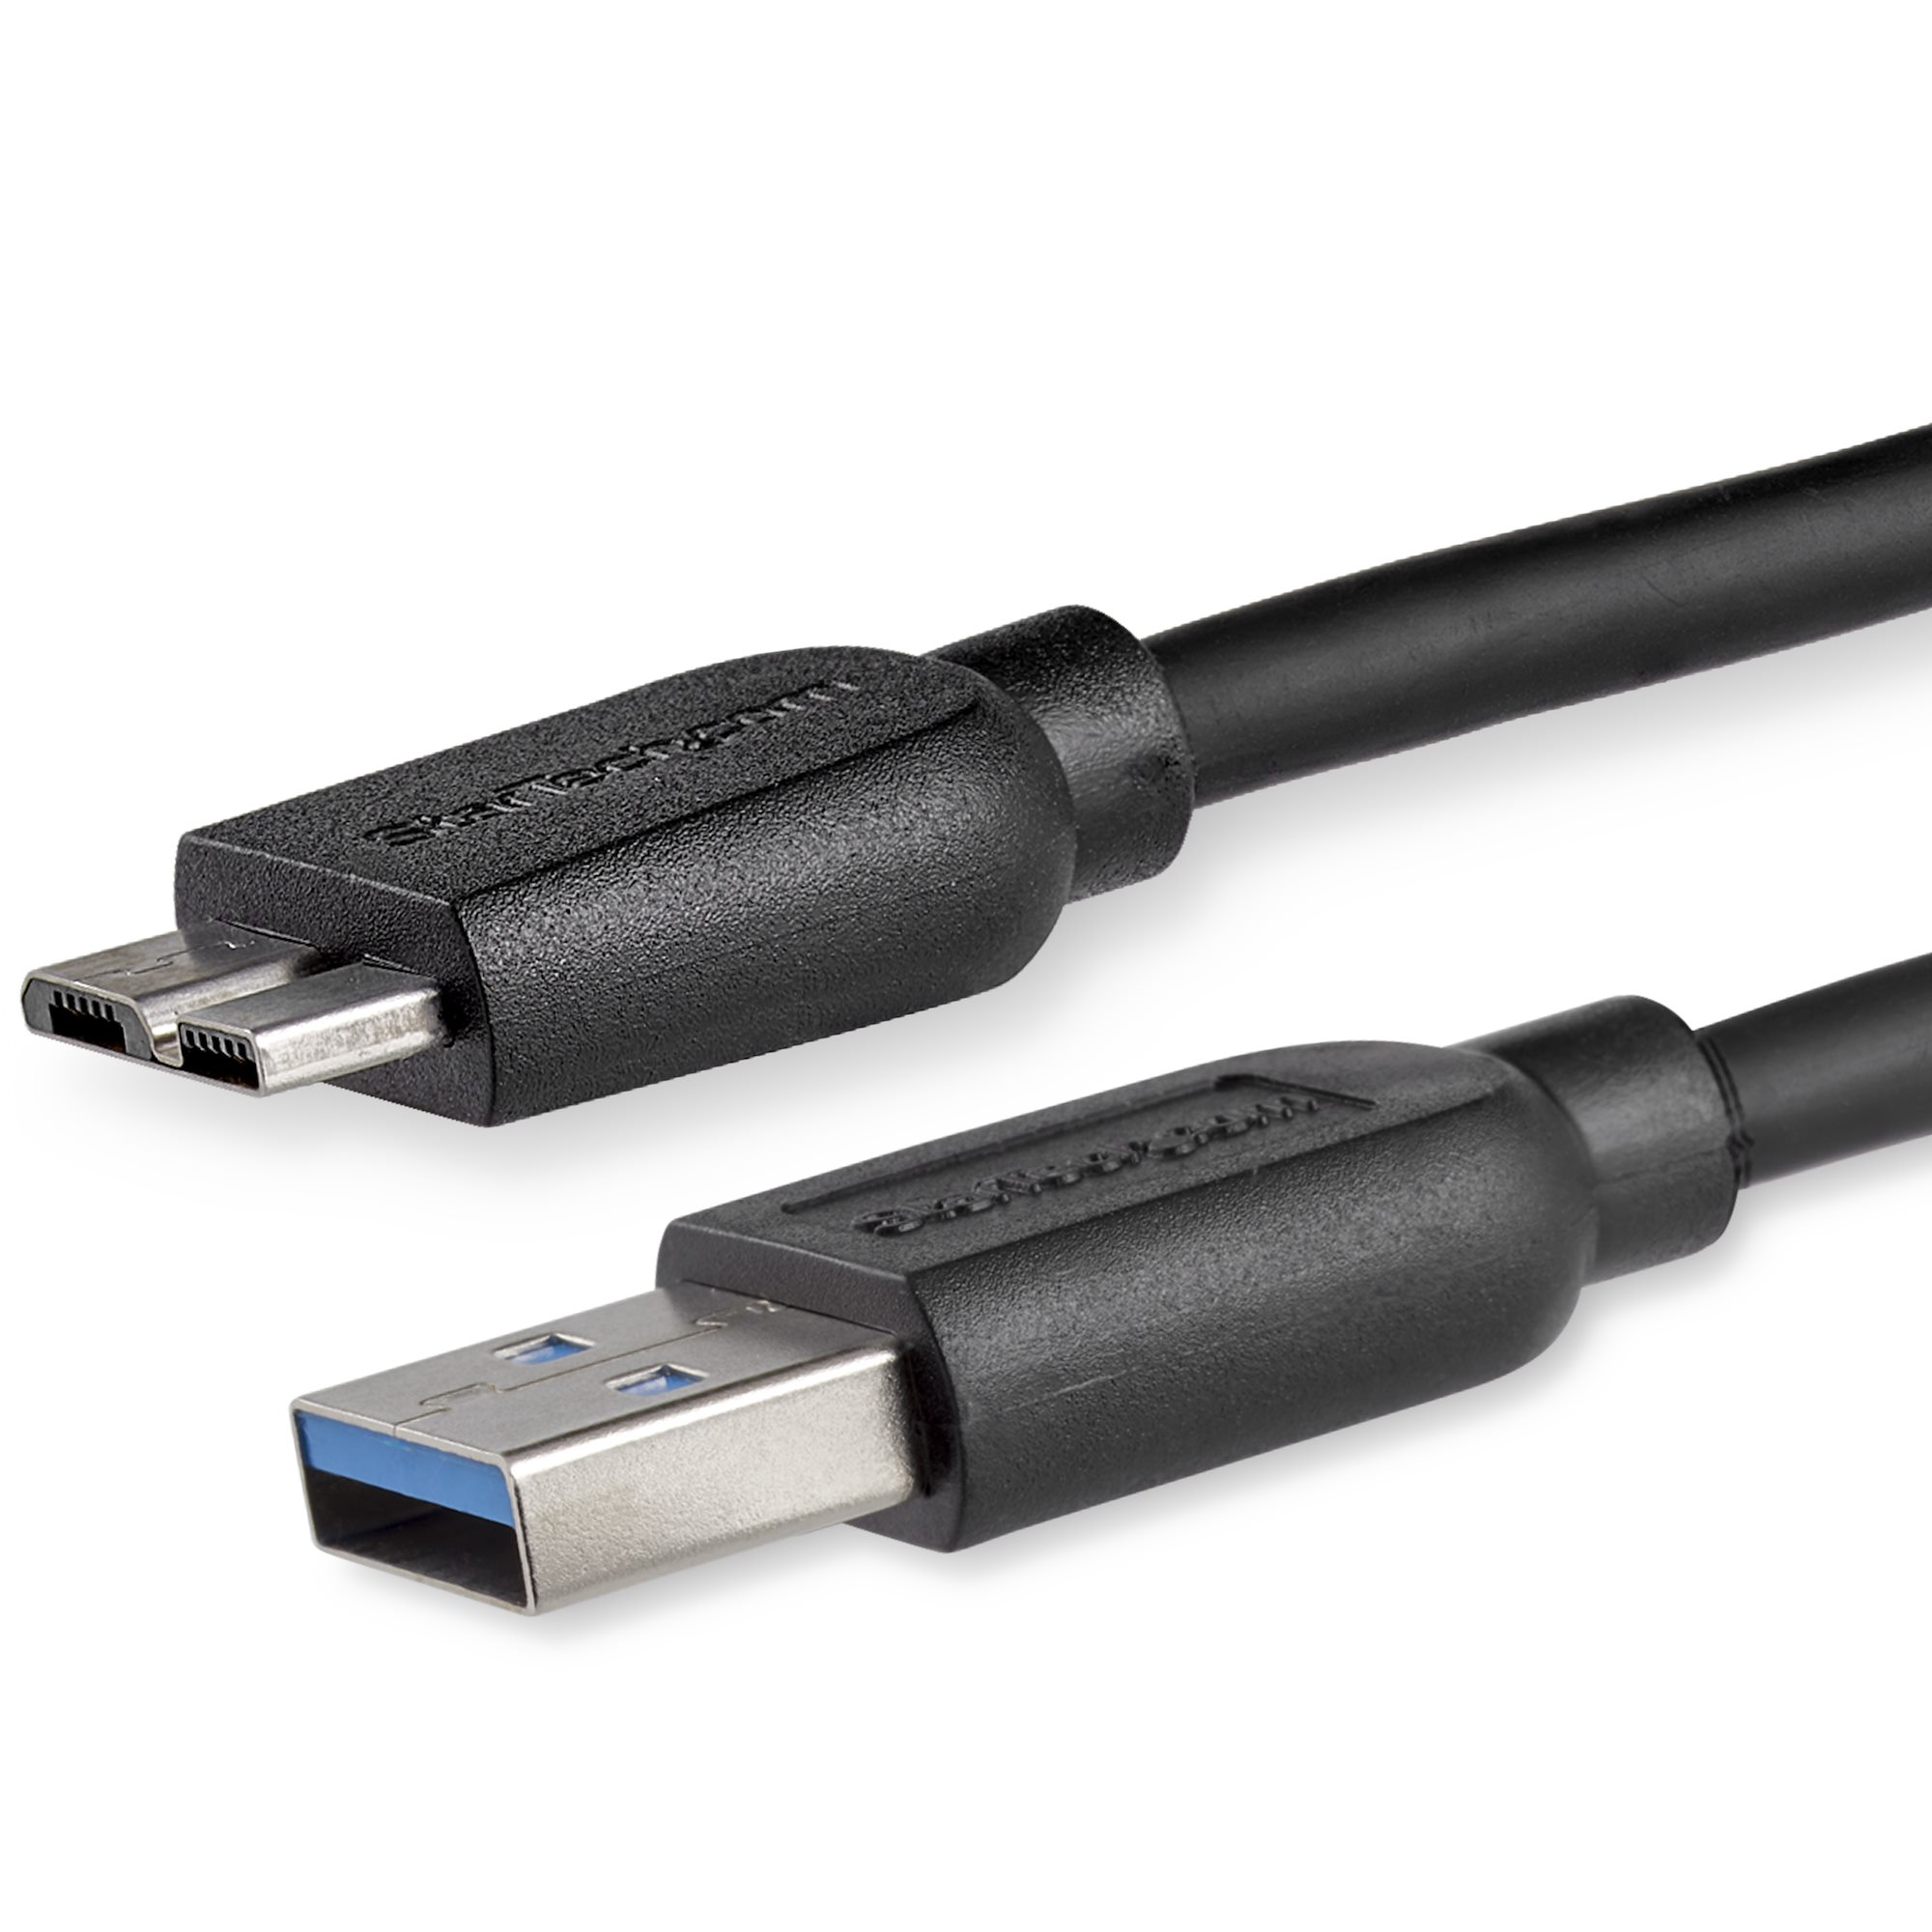 2m 6ft Slim USB 3.0 B Cable - USB 3.0 Cables StarTech.com